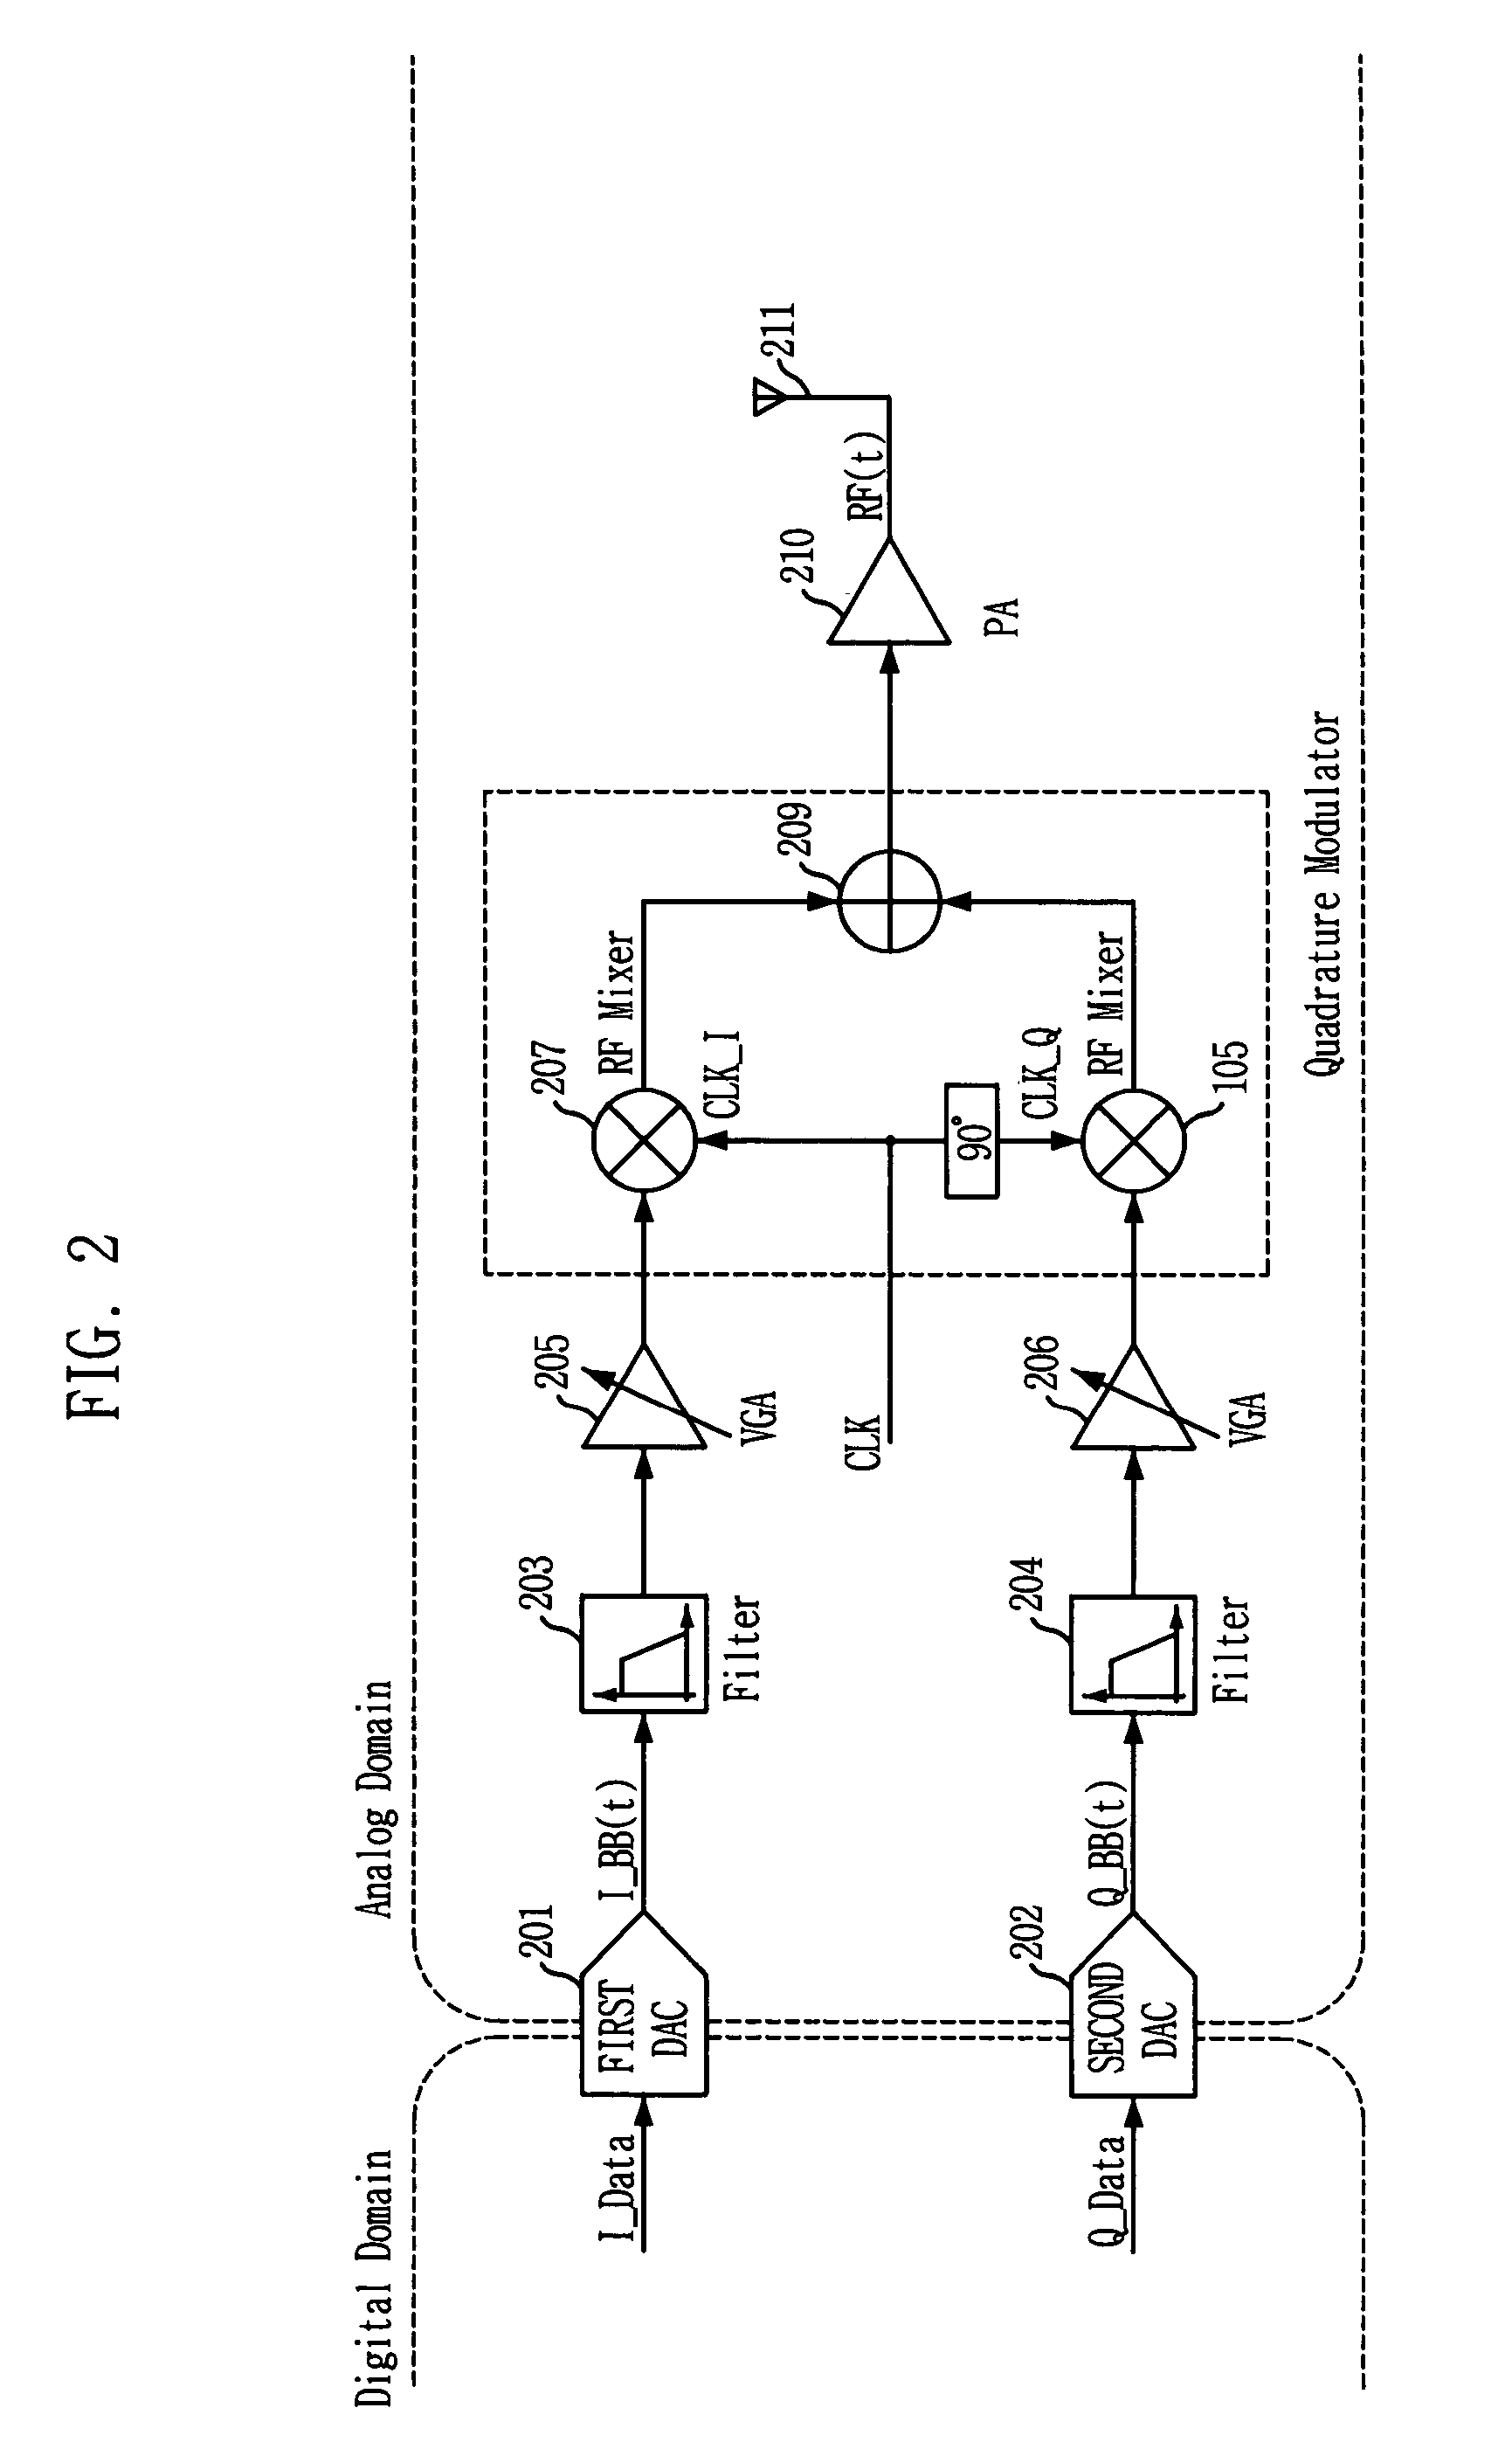 Quadrature modulation transmitter